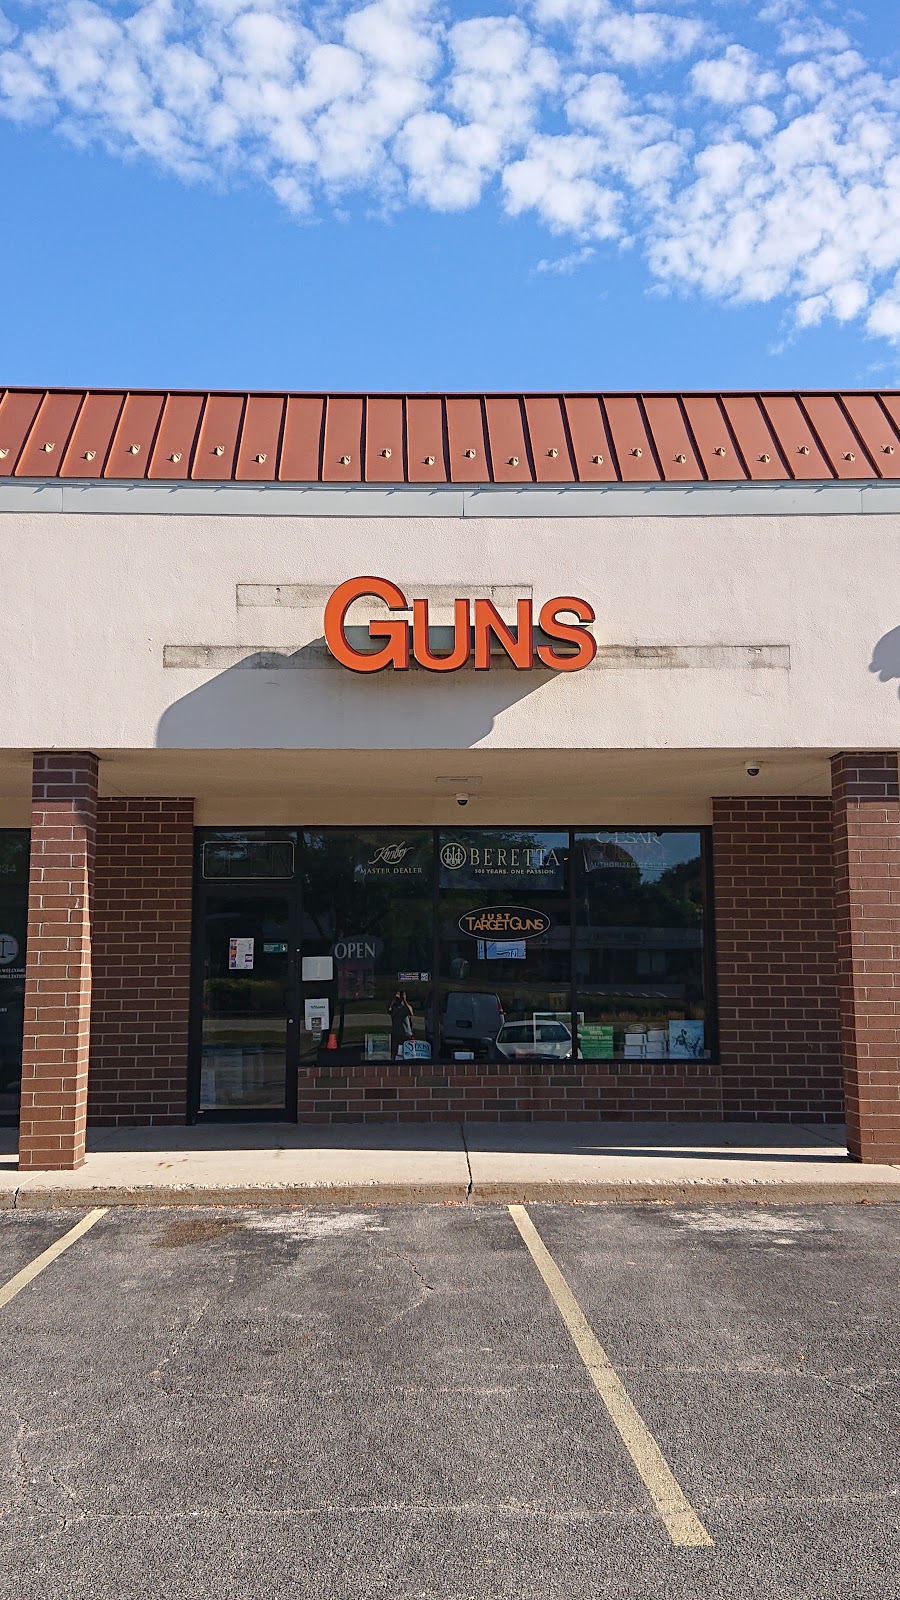 Just Target Guns | 332 Peterson Rd, Libertyville, IL 60048, USA | Phone: (847) 549-6226